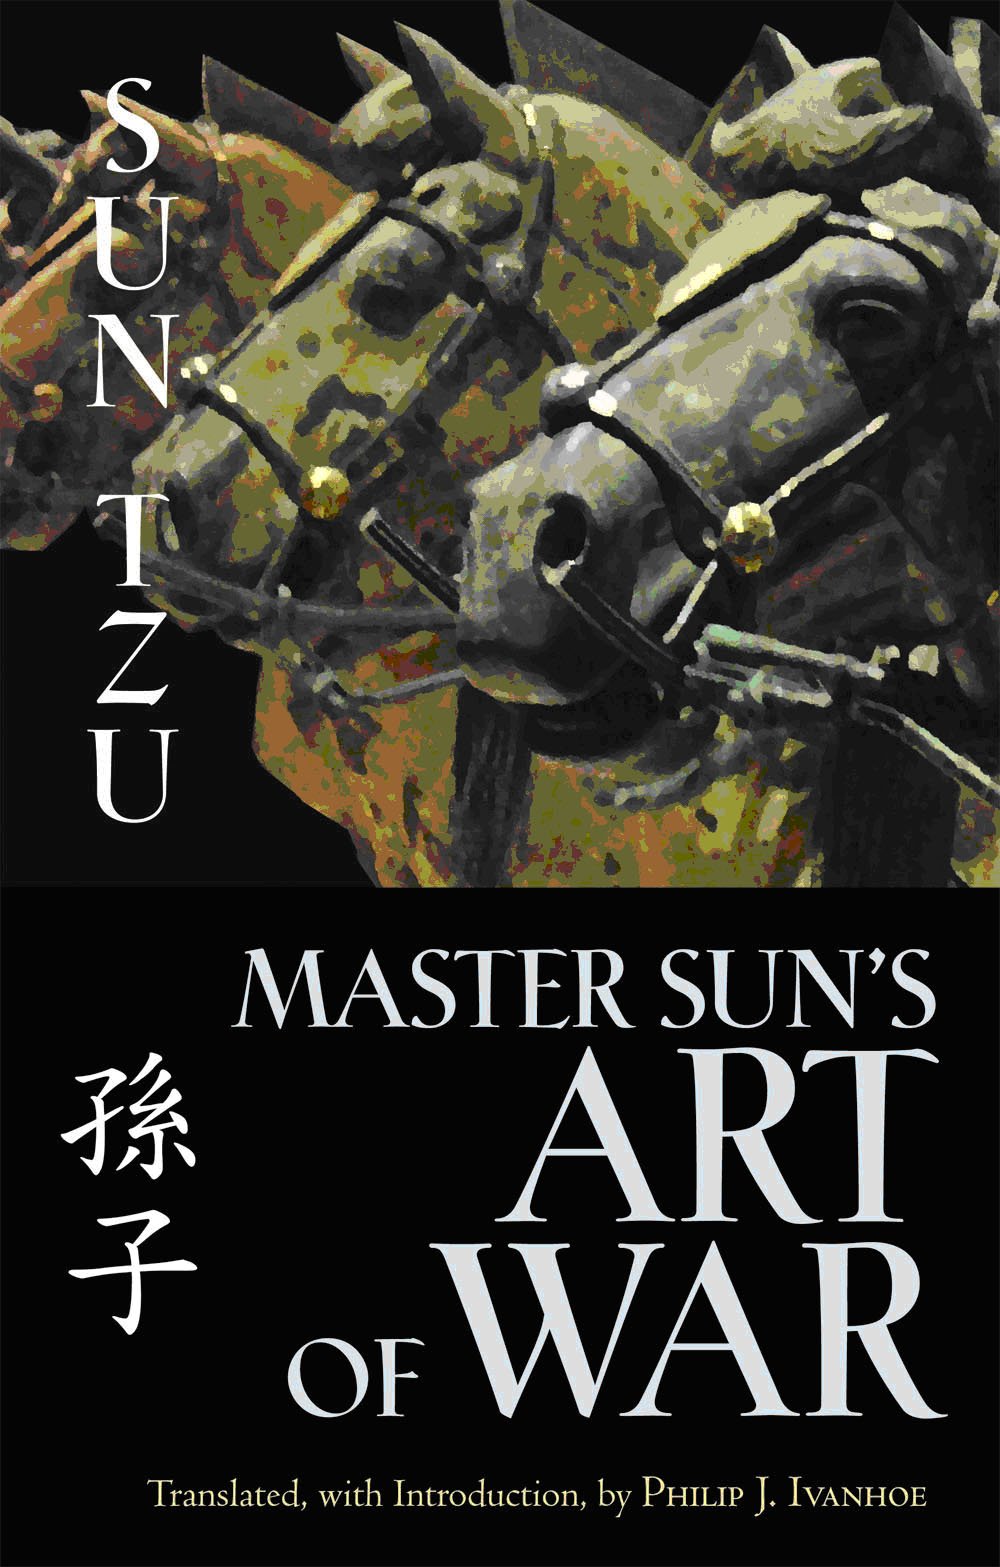 Master Sun's Art of War